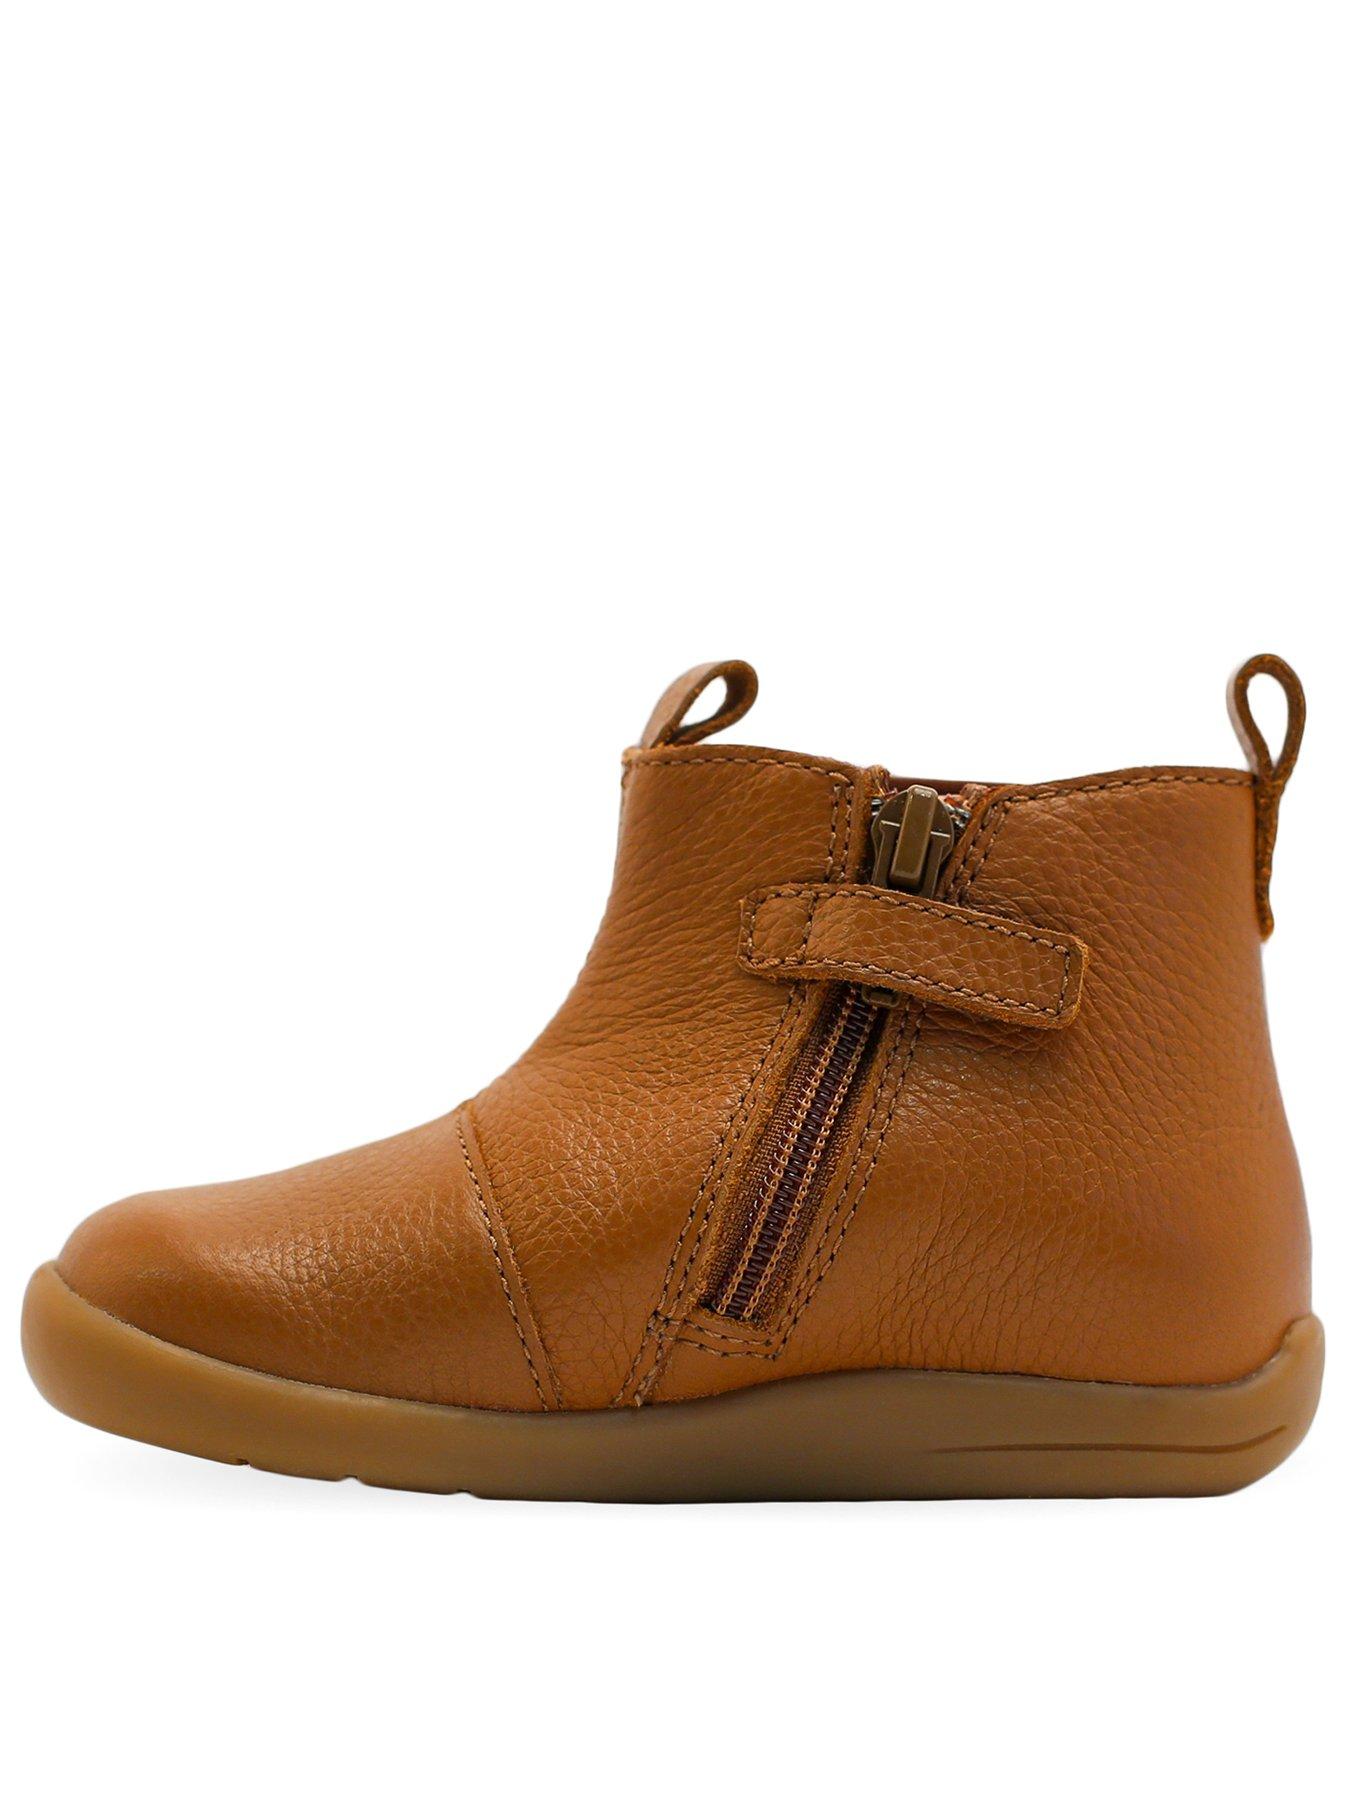 Kids Avenue Boot - Tan Leather